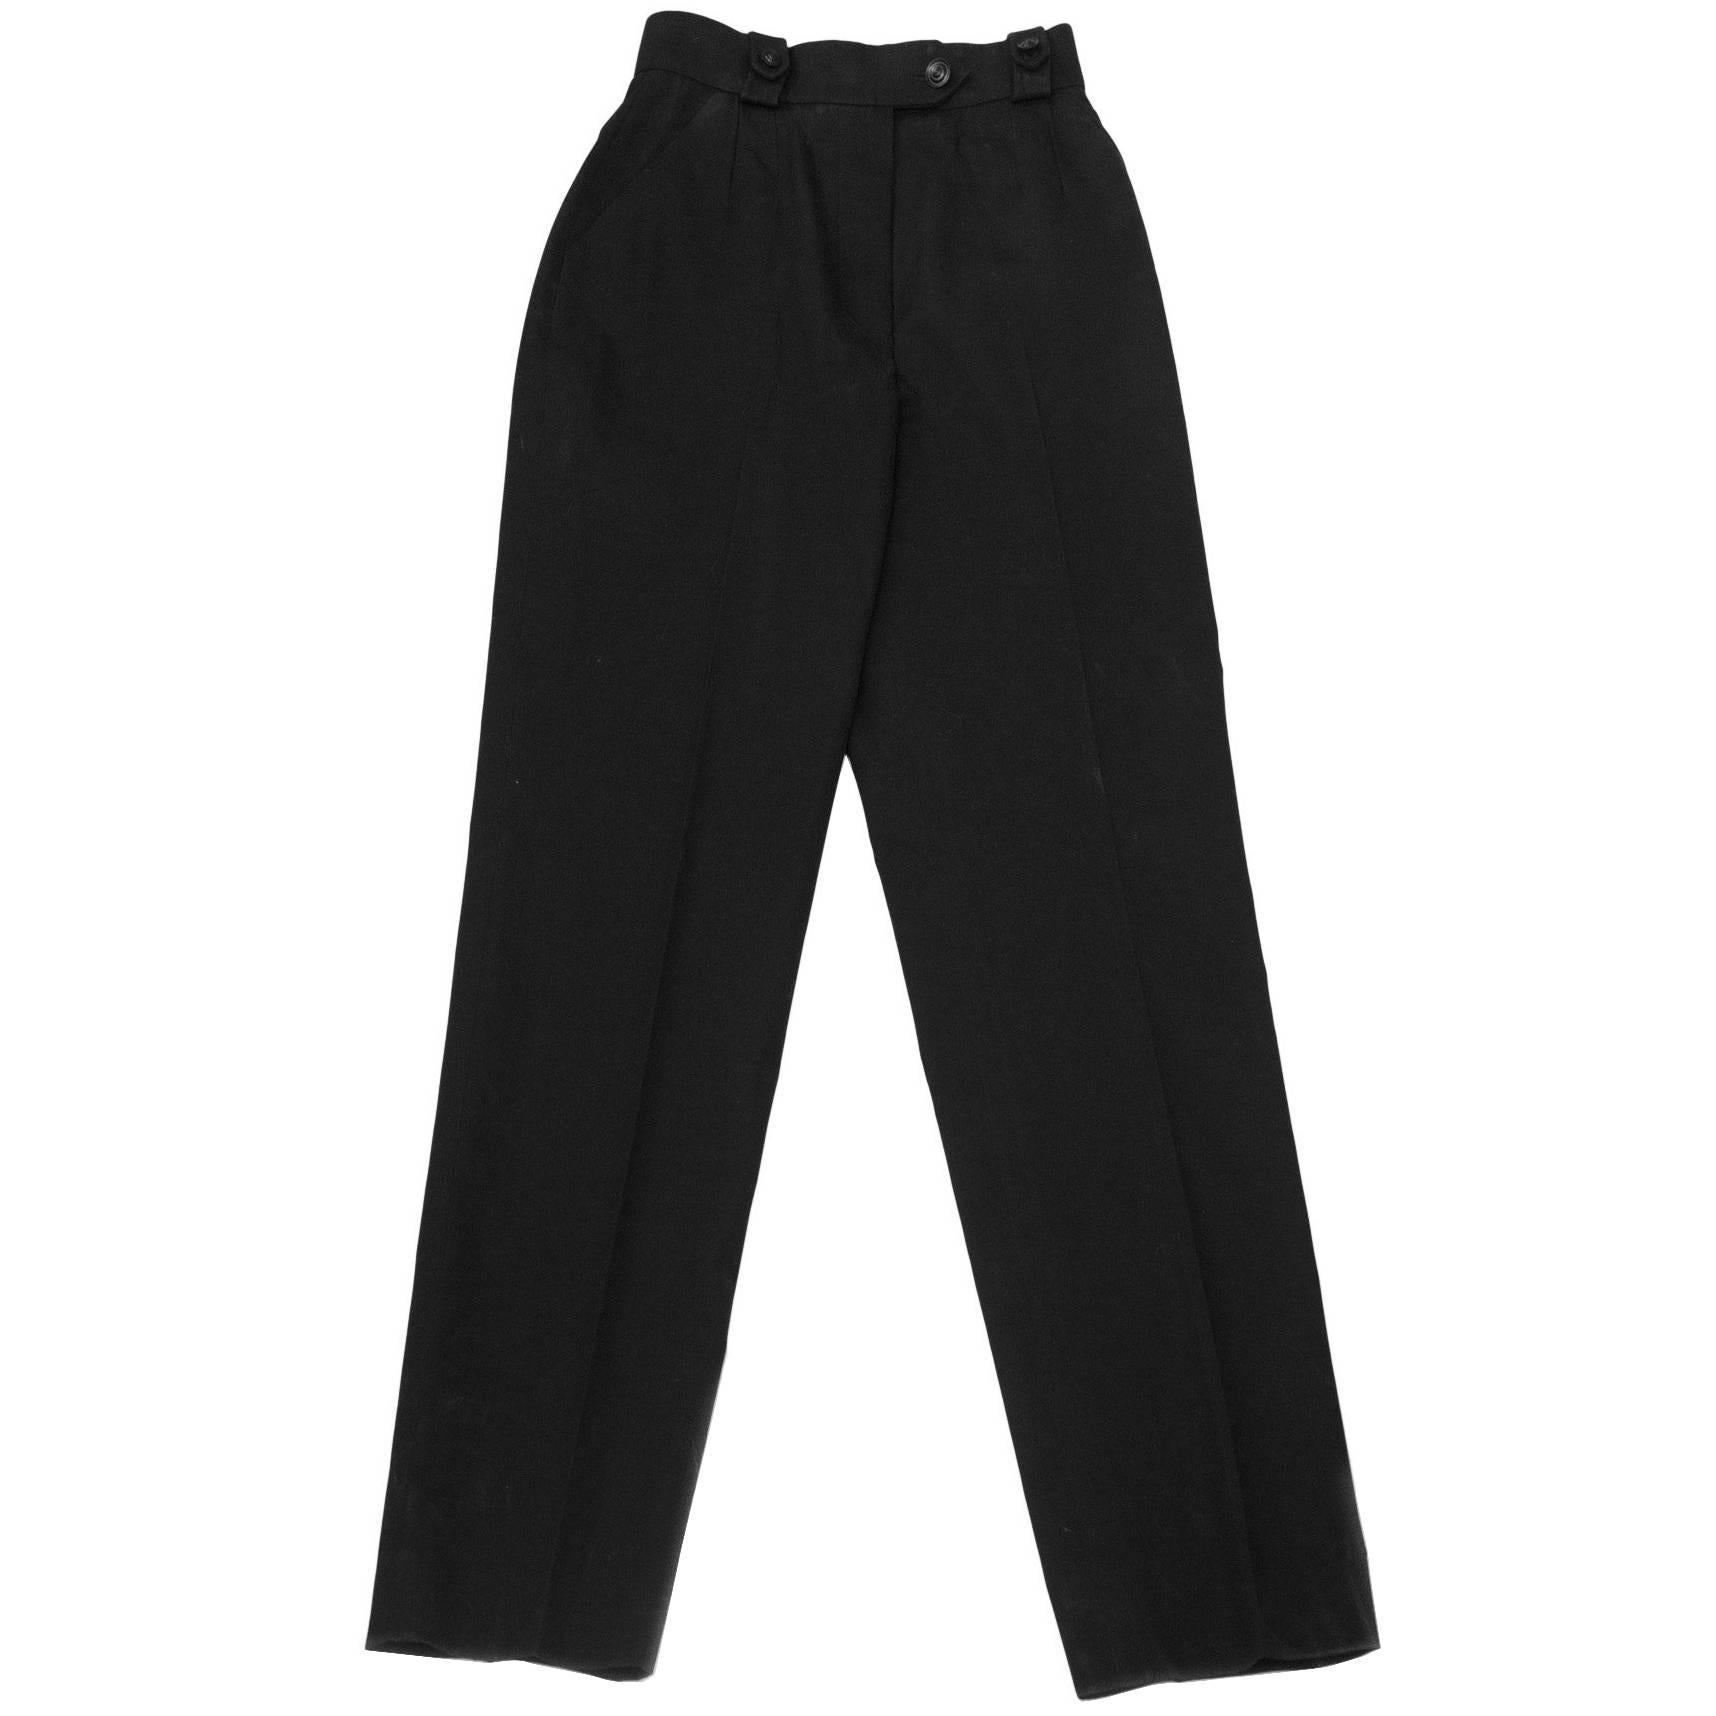 Chanel Black Cotton High Waisted Pants sz FR34